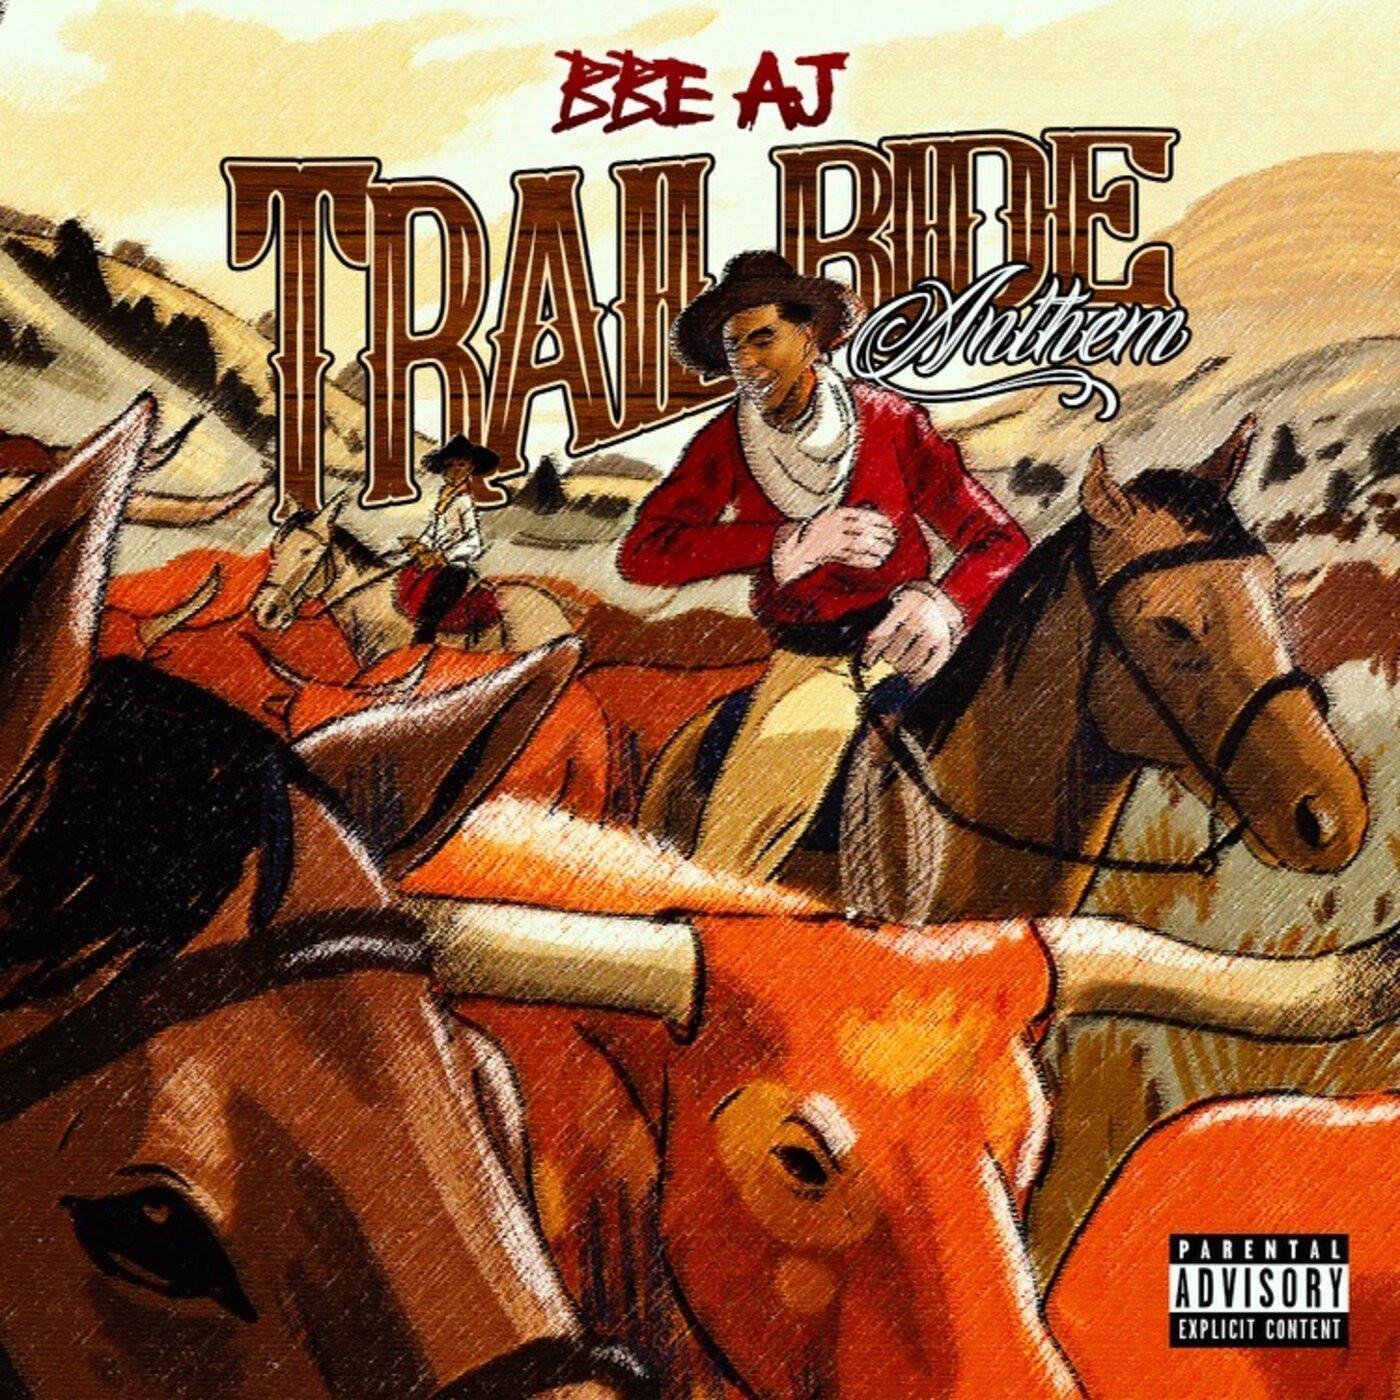 BBE AJ - Trailride Anthem (Radio Edit)